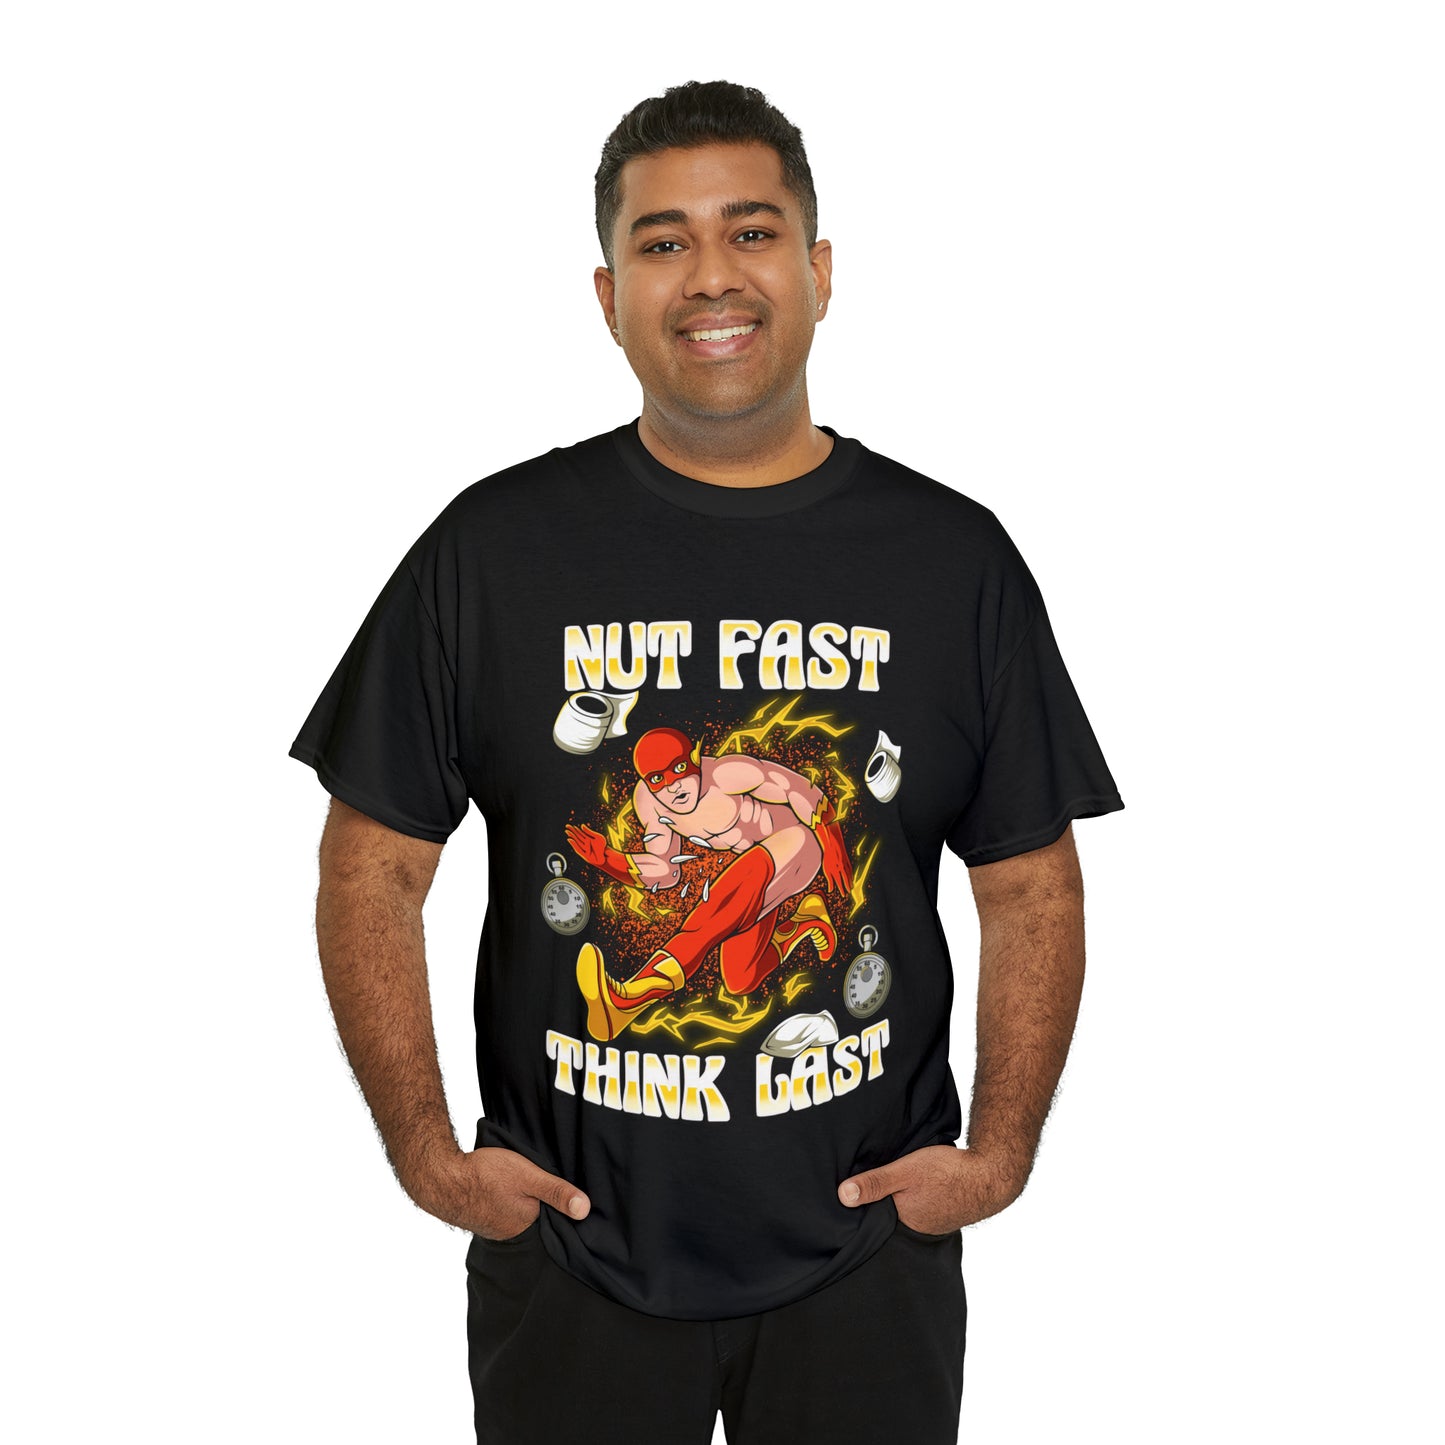 The Flash T-shirt